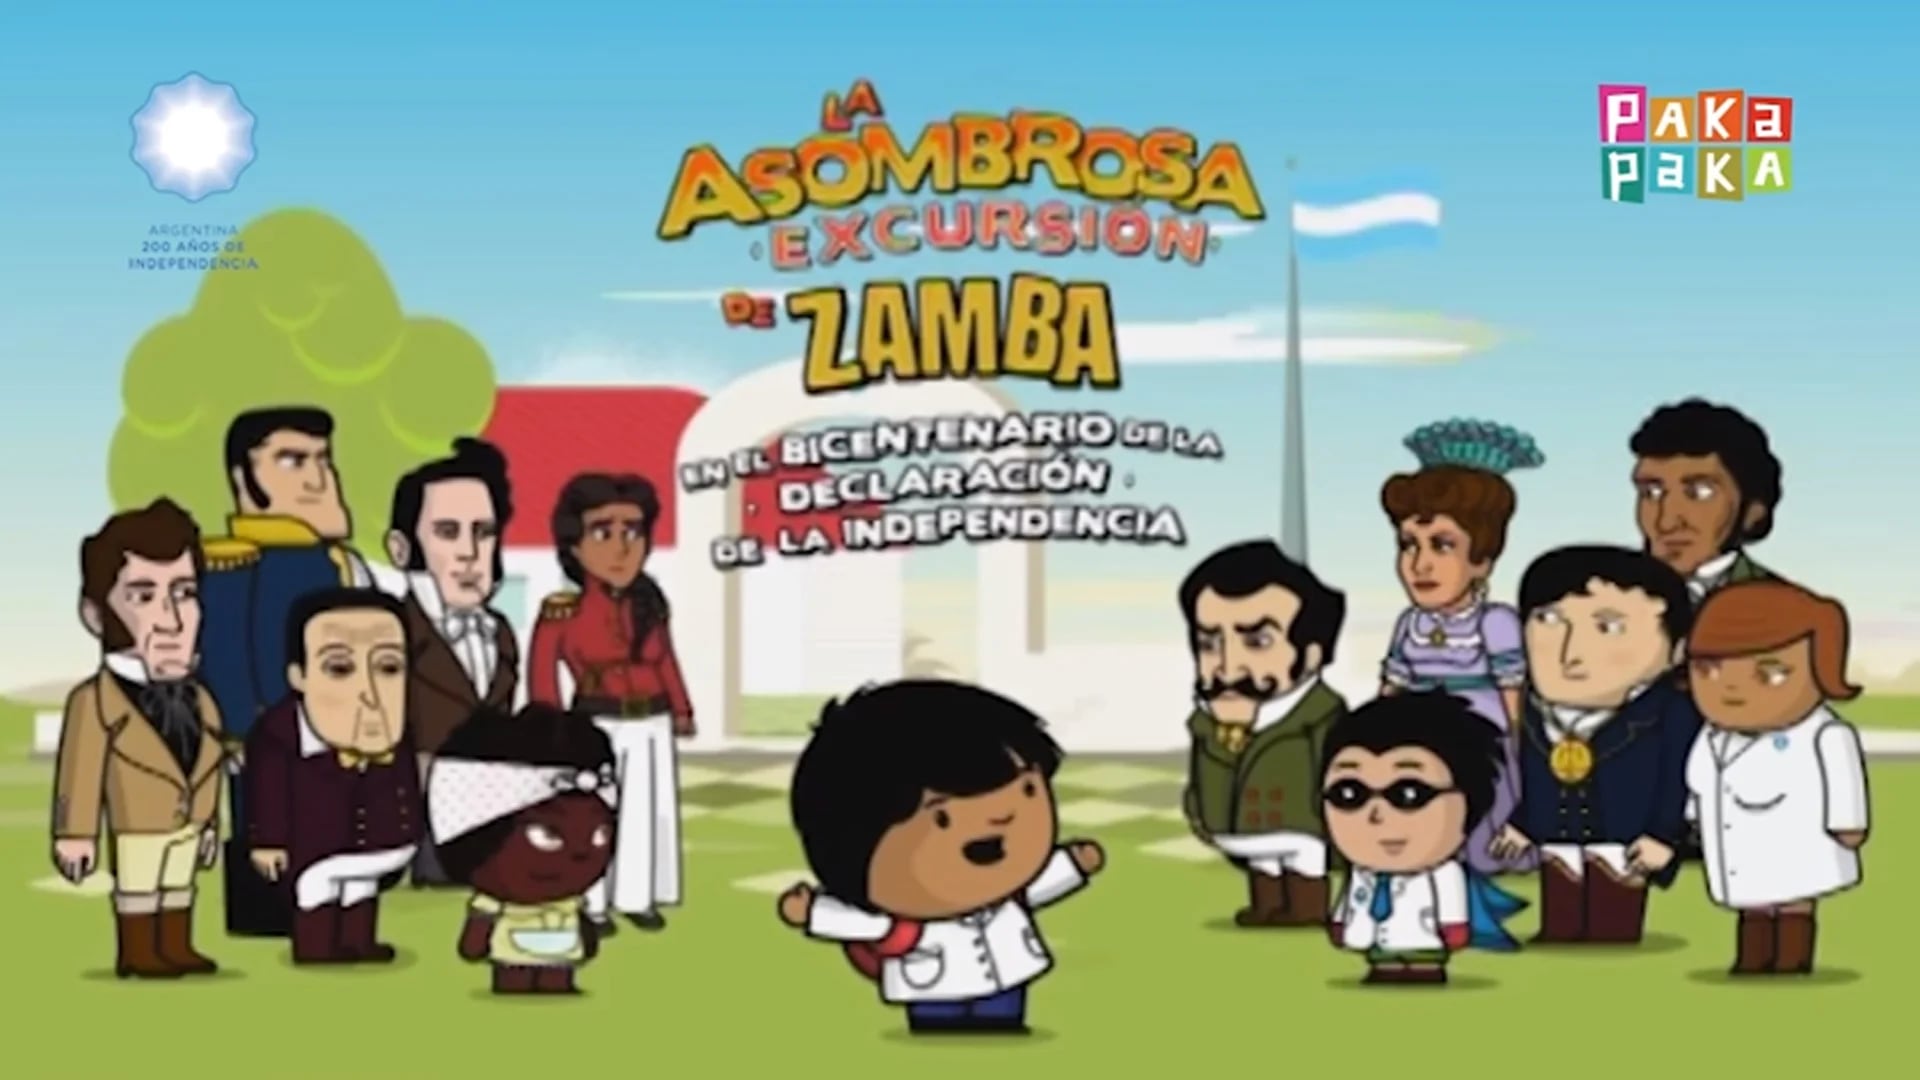 La asombrosa excursión de Zamba